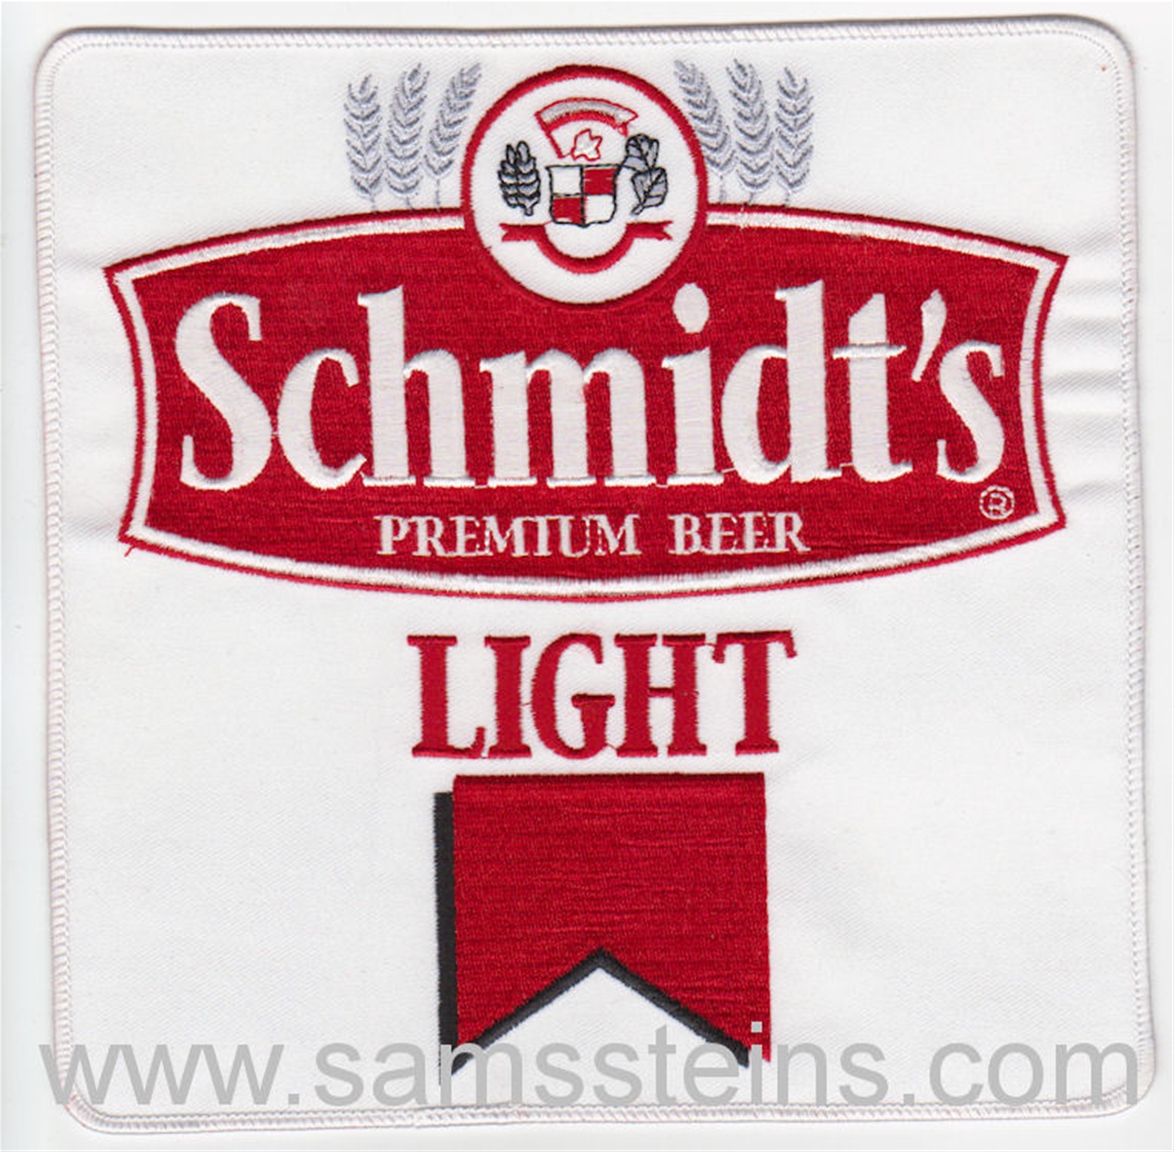 Schmidt's Light Large Beer Patch